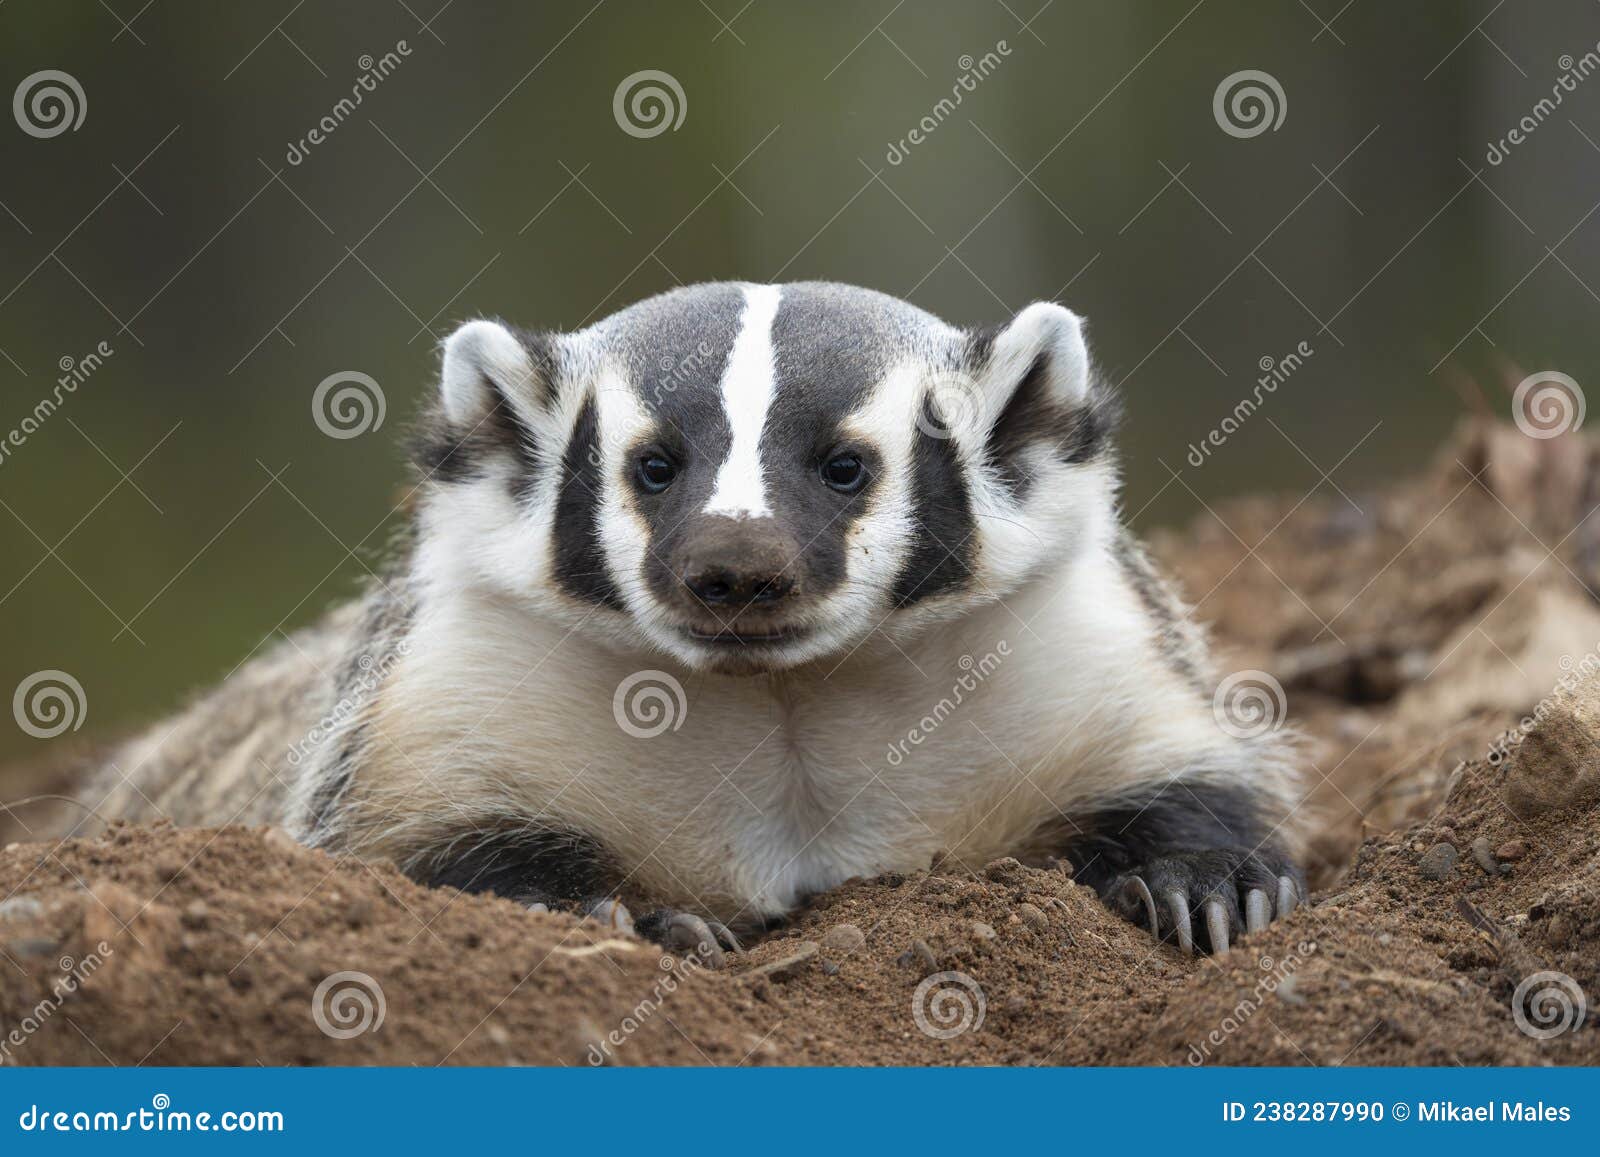 american badger resting on his den